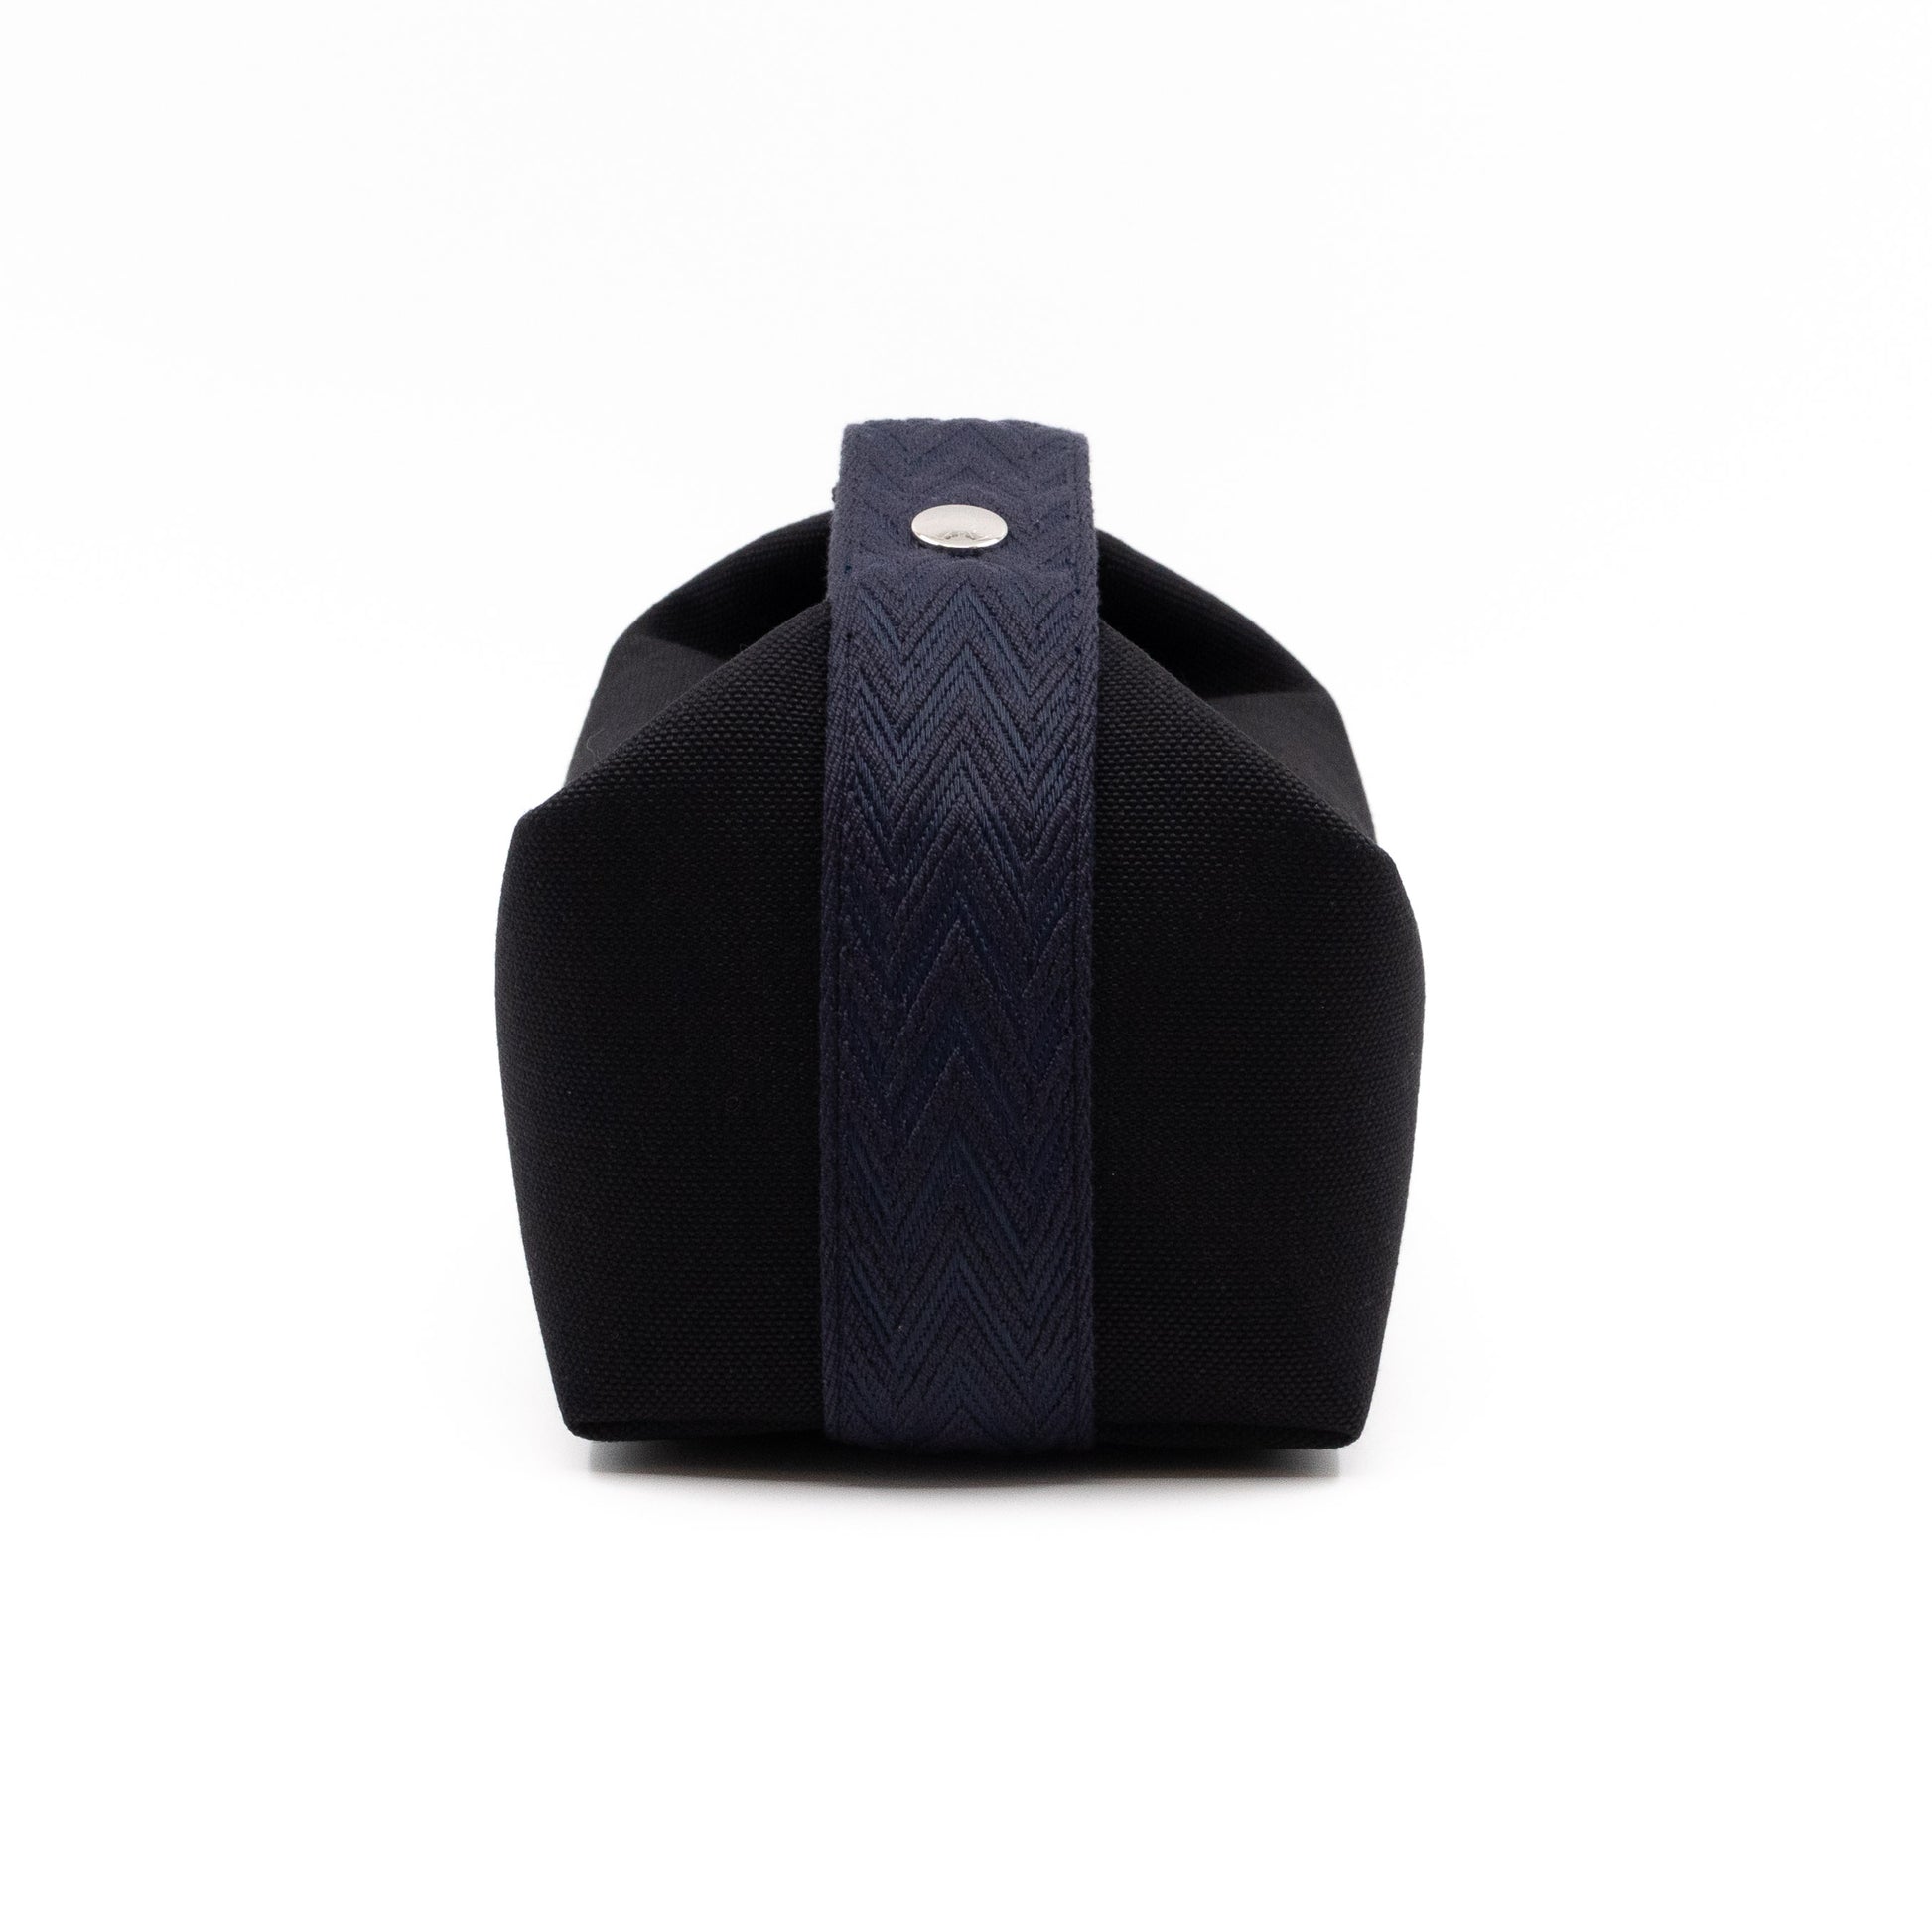 Hermès Bride-a-Brac Rocabar case, small model $660 Bleu Paon